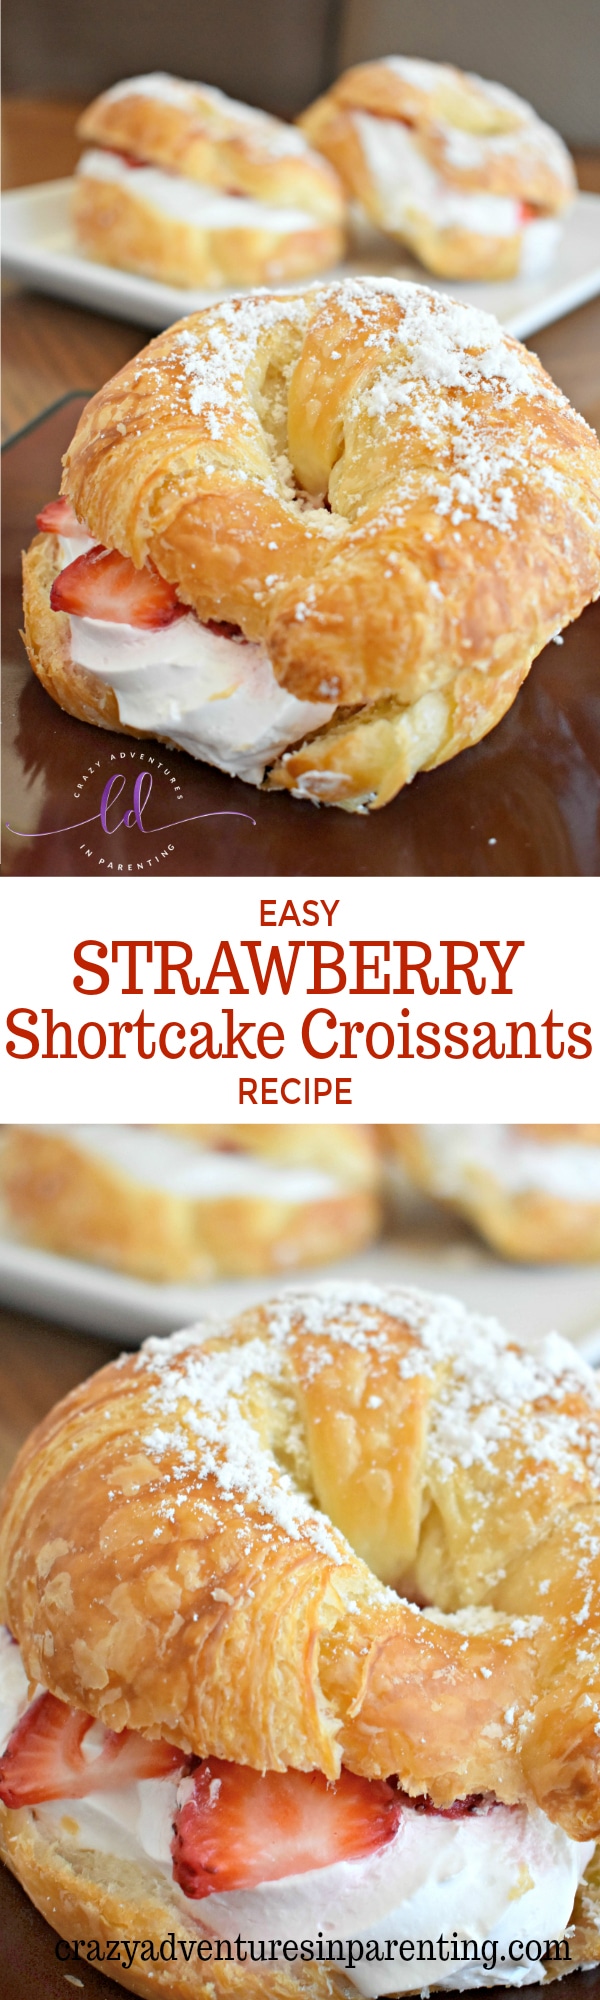 Easy Strawberry Shortcake Croissants Recipe